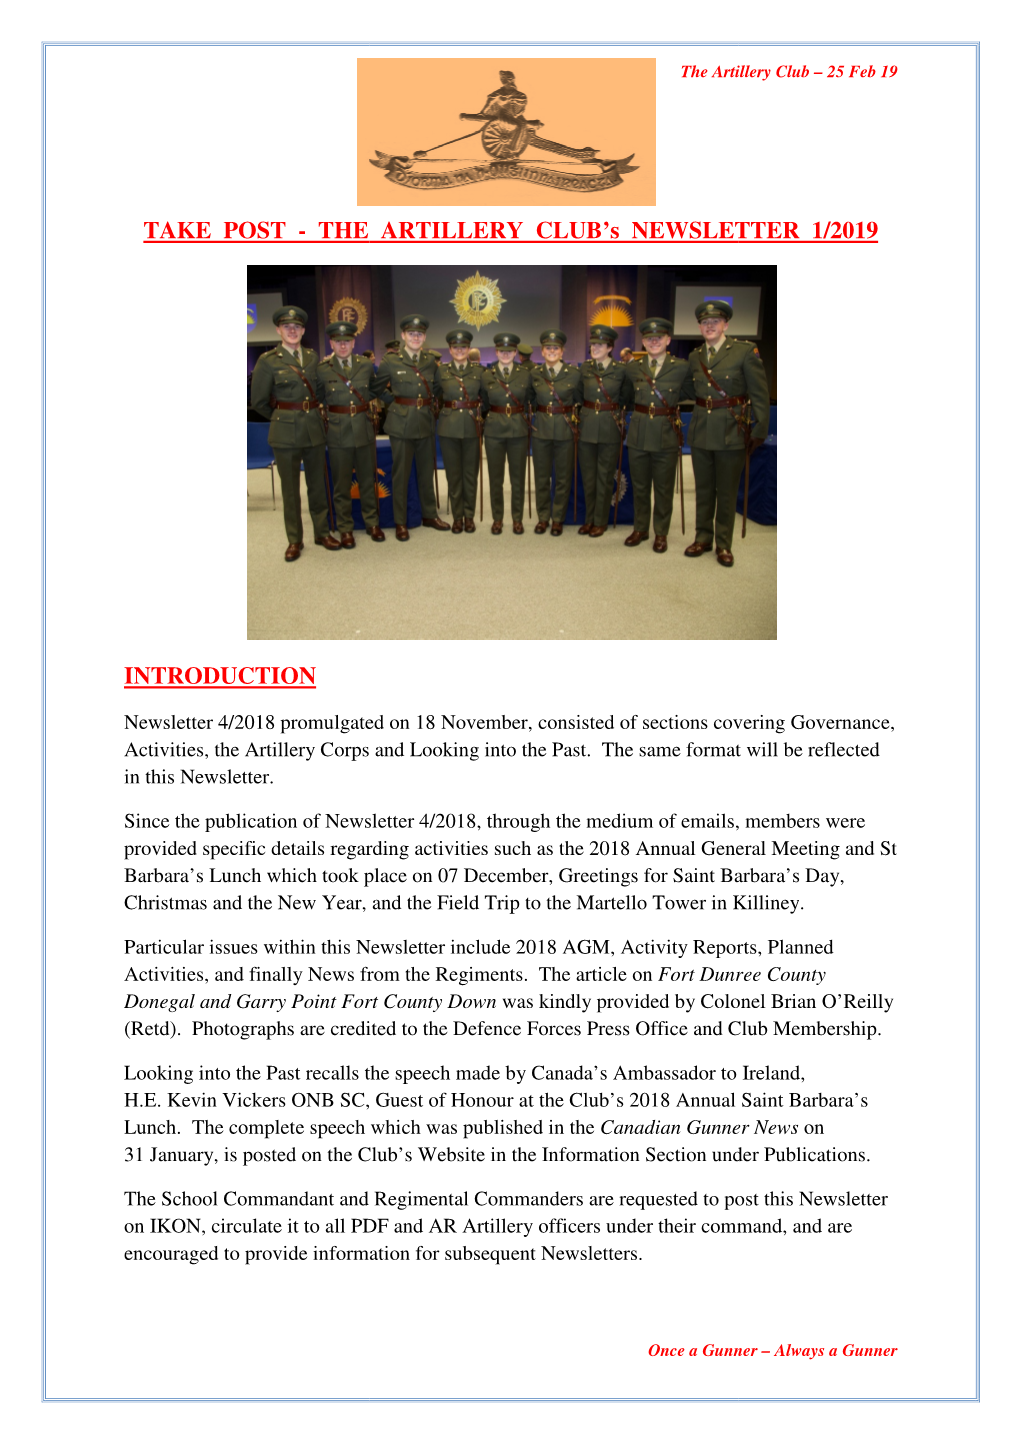 Artillery Club Newsletter 1 of 2019 ( V 25 Feb